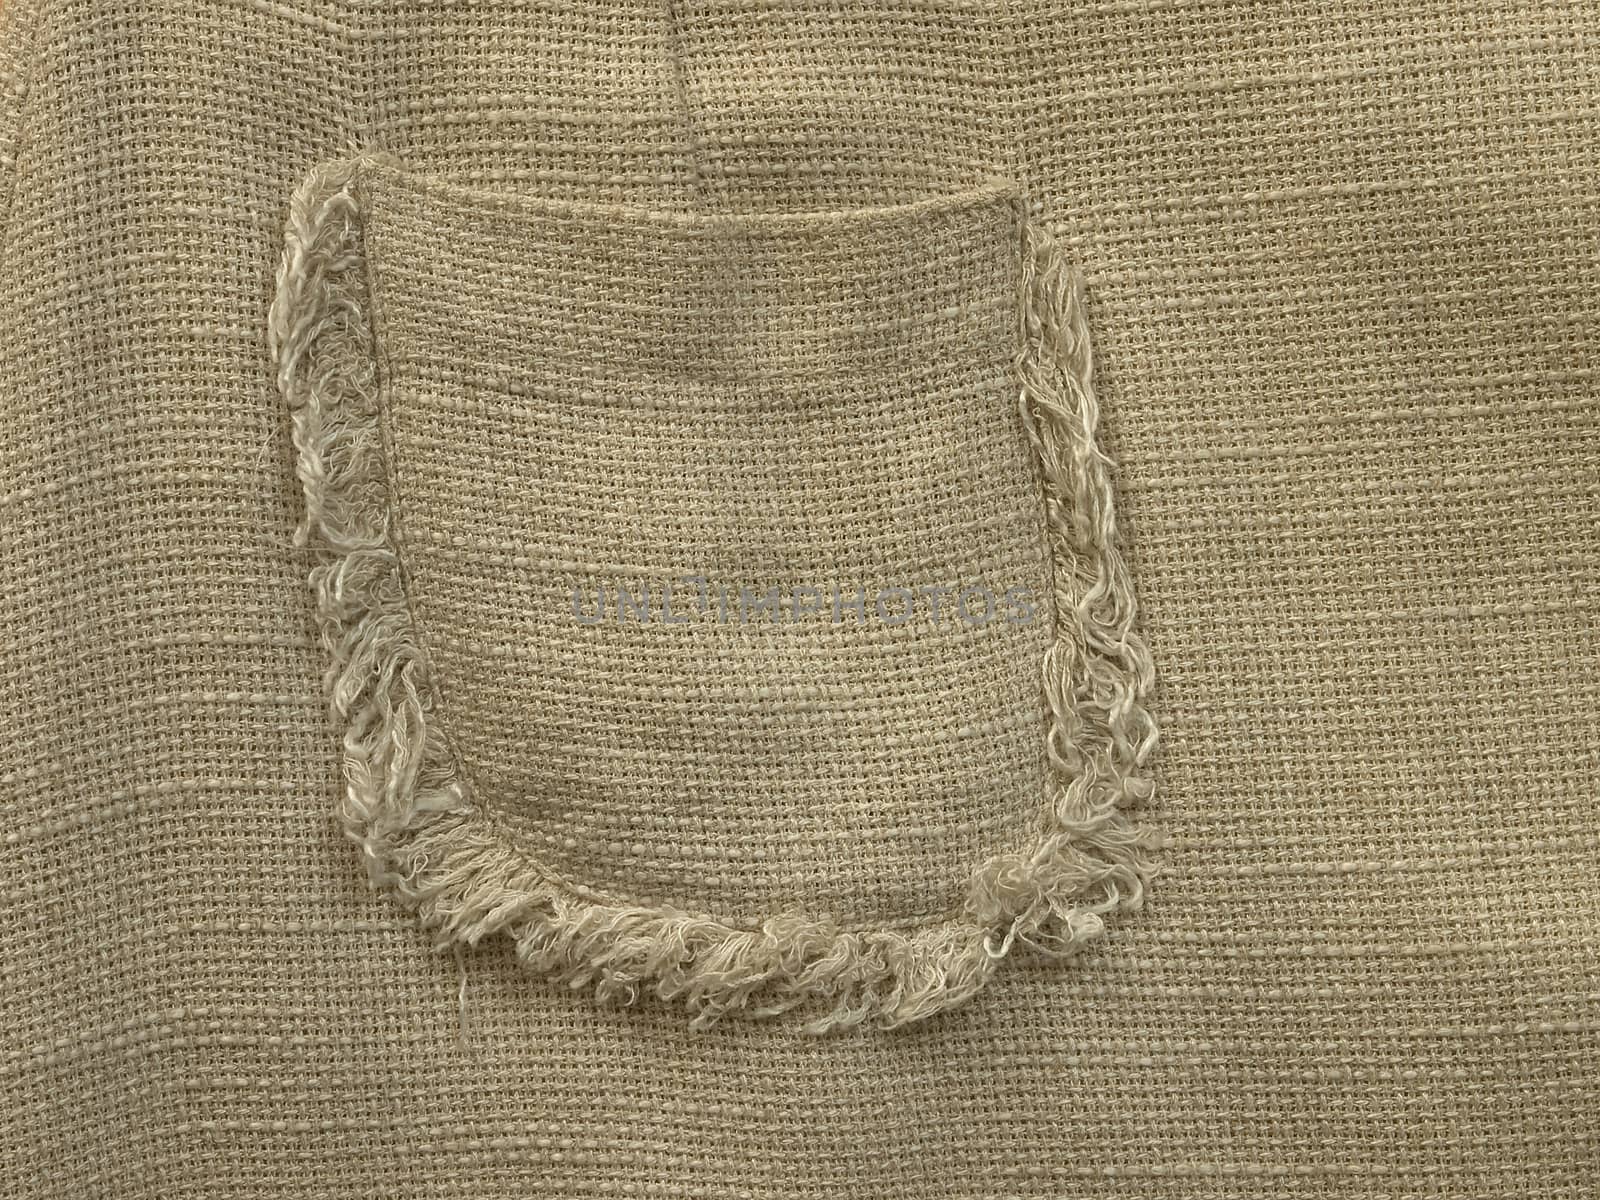 linen material and pocket by Venakr